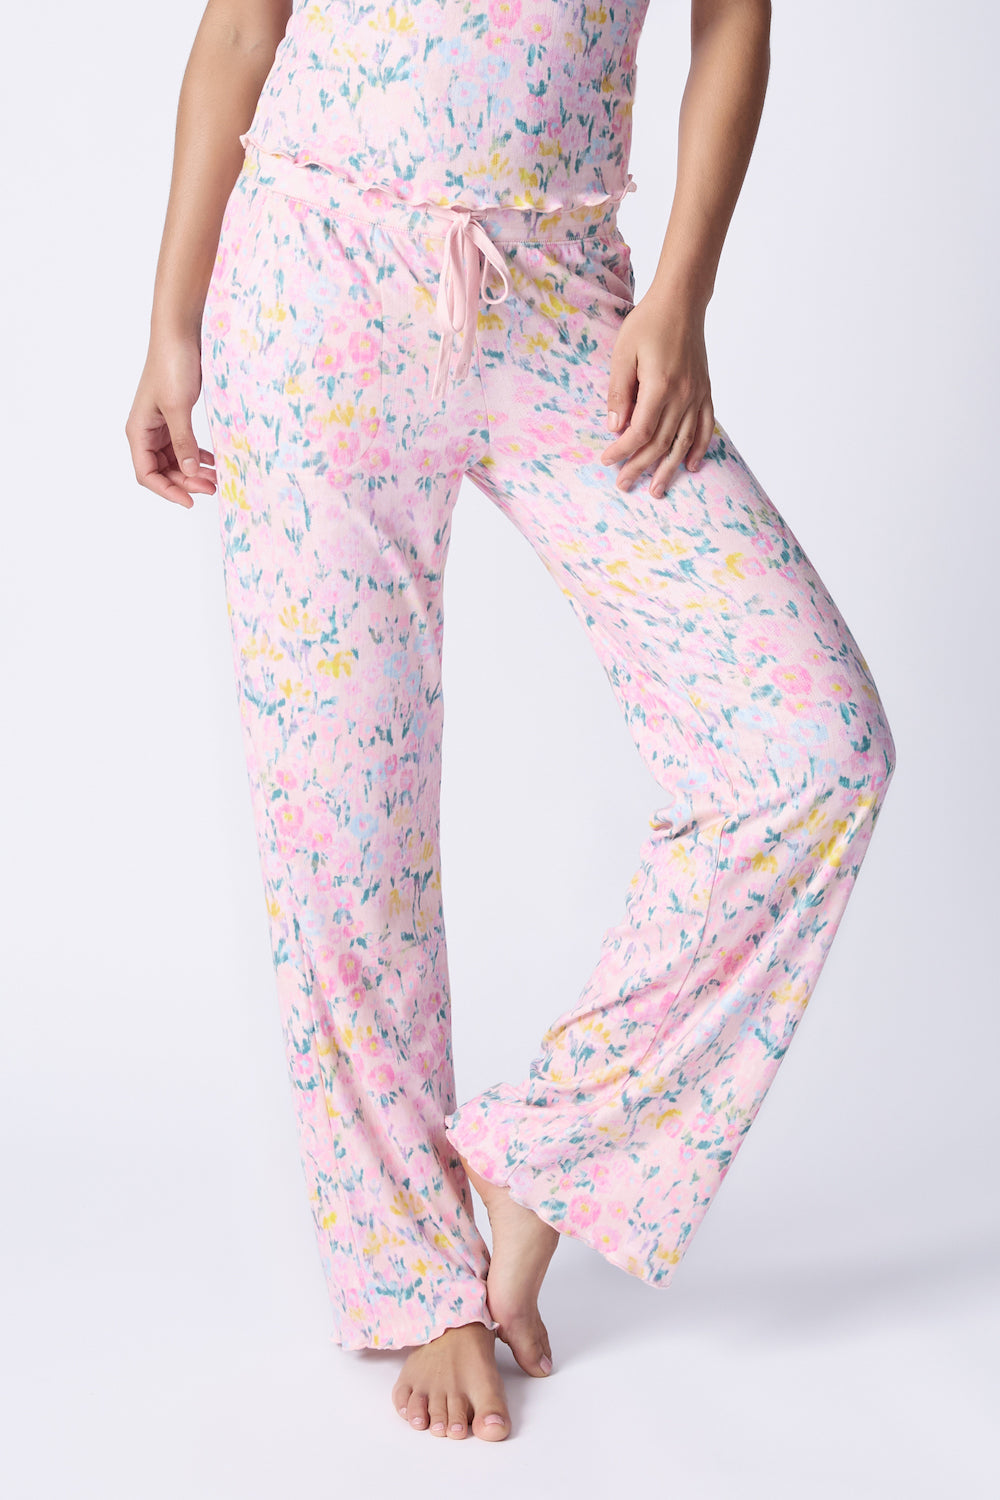 PJ Salvage Floral Fields PJ Set - Blush Sleepwear - Pajamas by PJ Salvage | Grace the Boutique